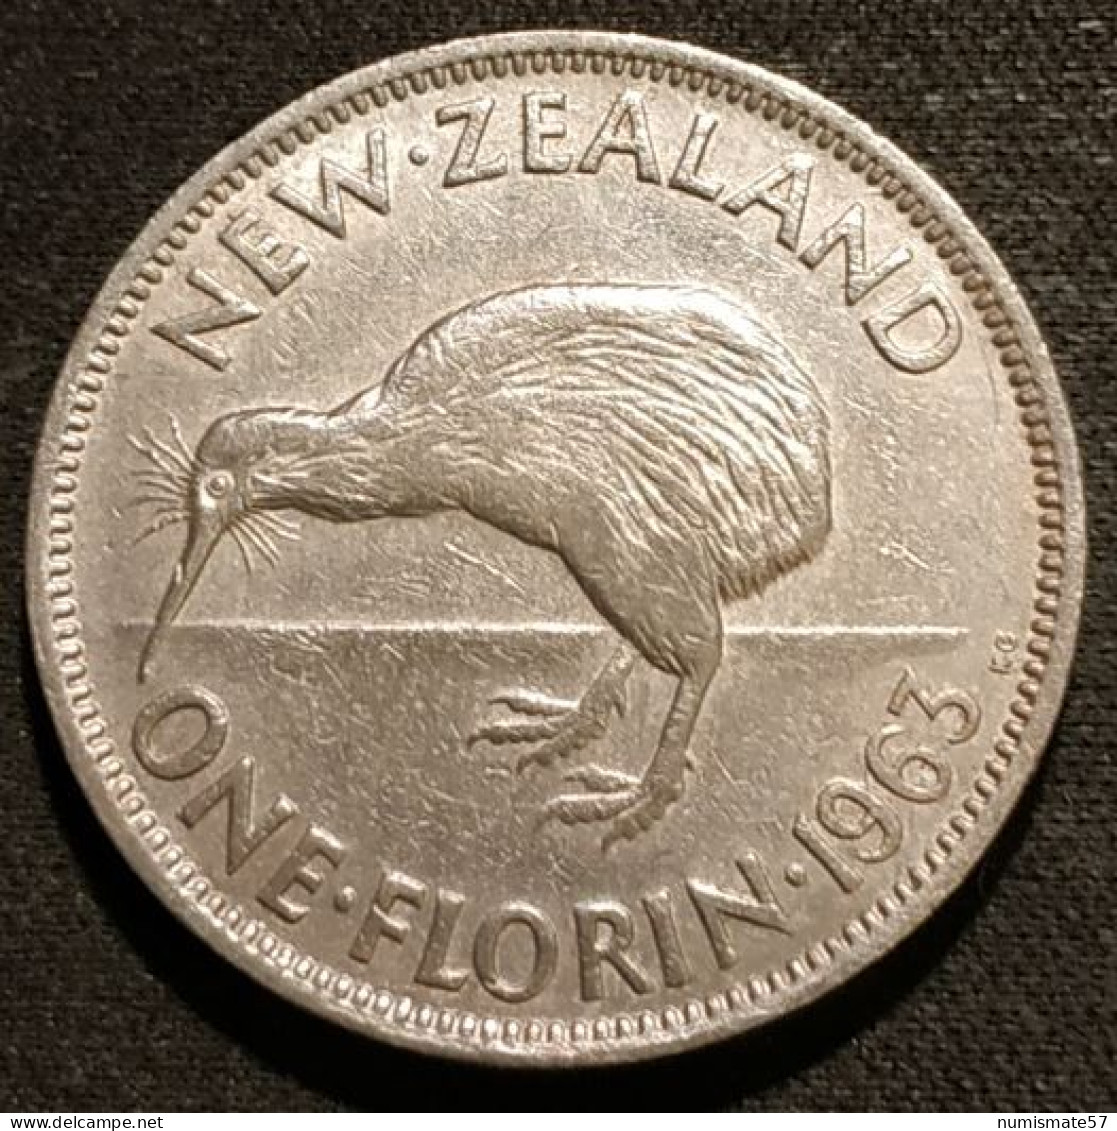 RARE - NOUVELLE ZELANDE - NEW ZEALAND - ONE - 1 FLORIN 1963 - Elisabeth II - KM 28.2 - New Zealand